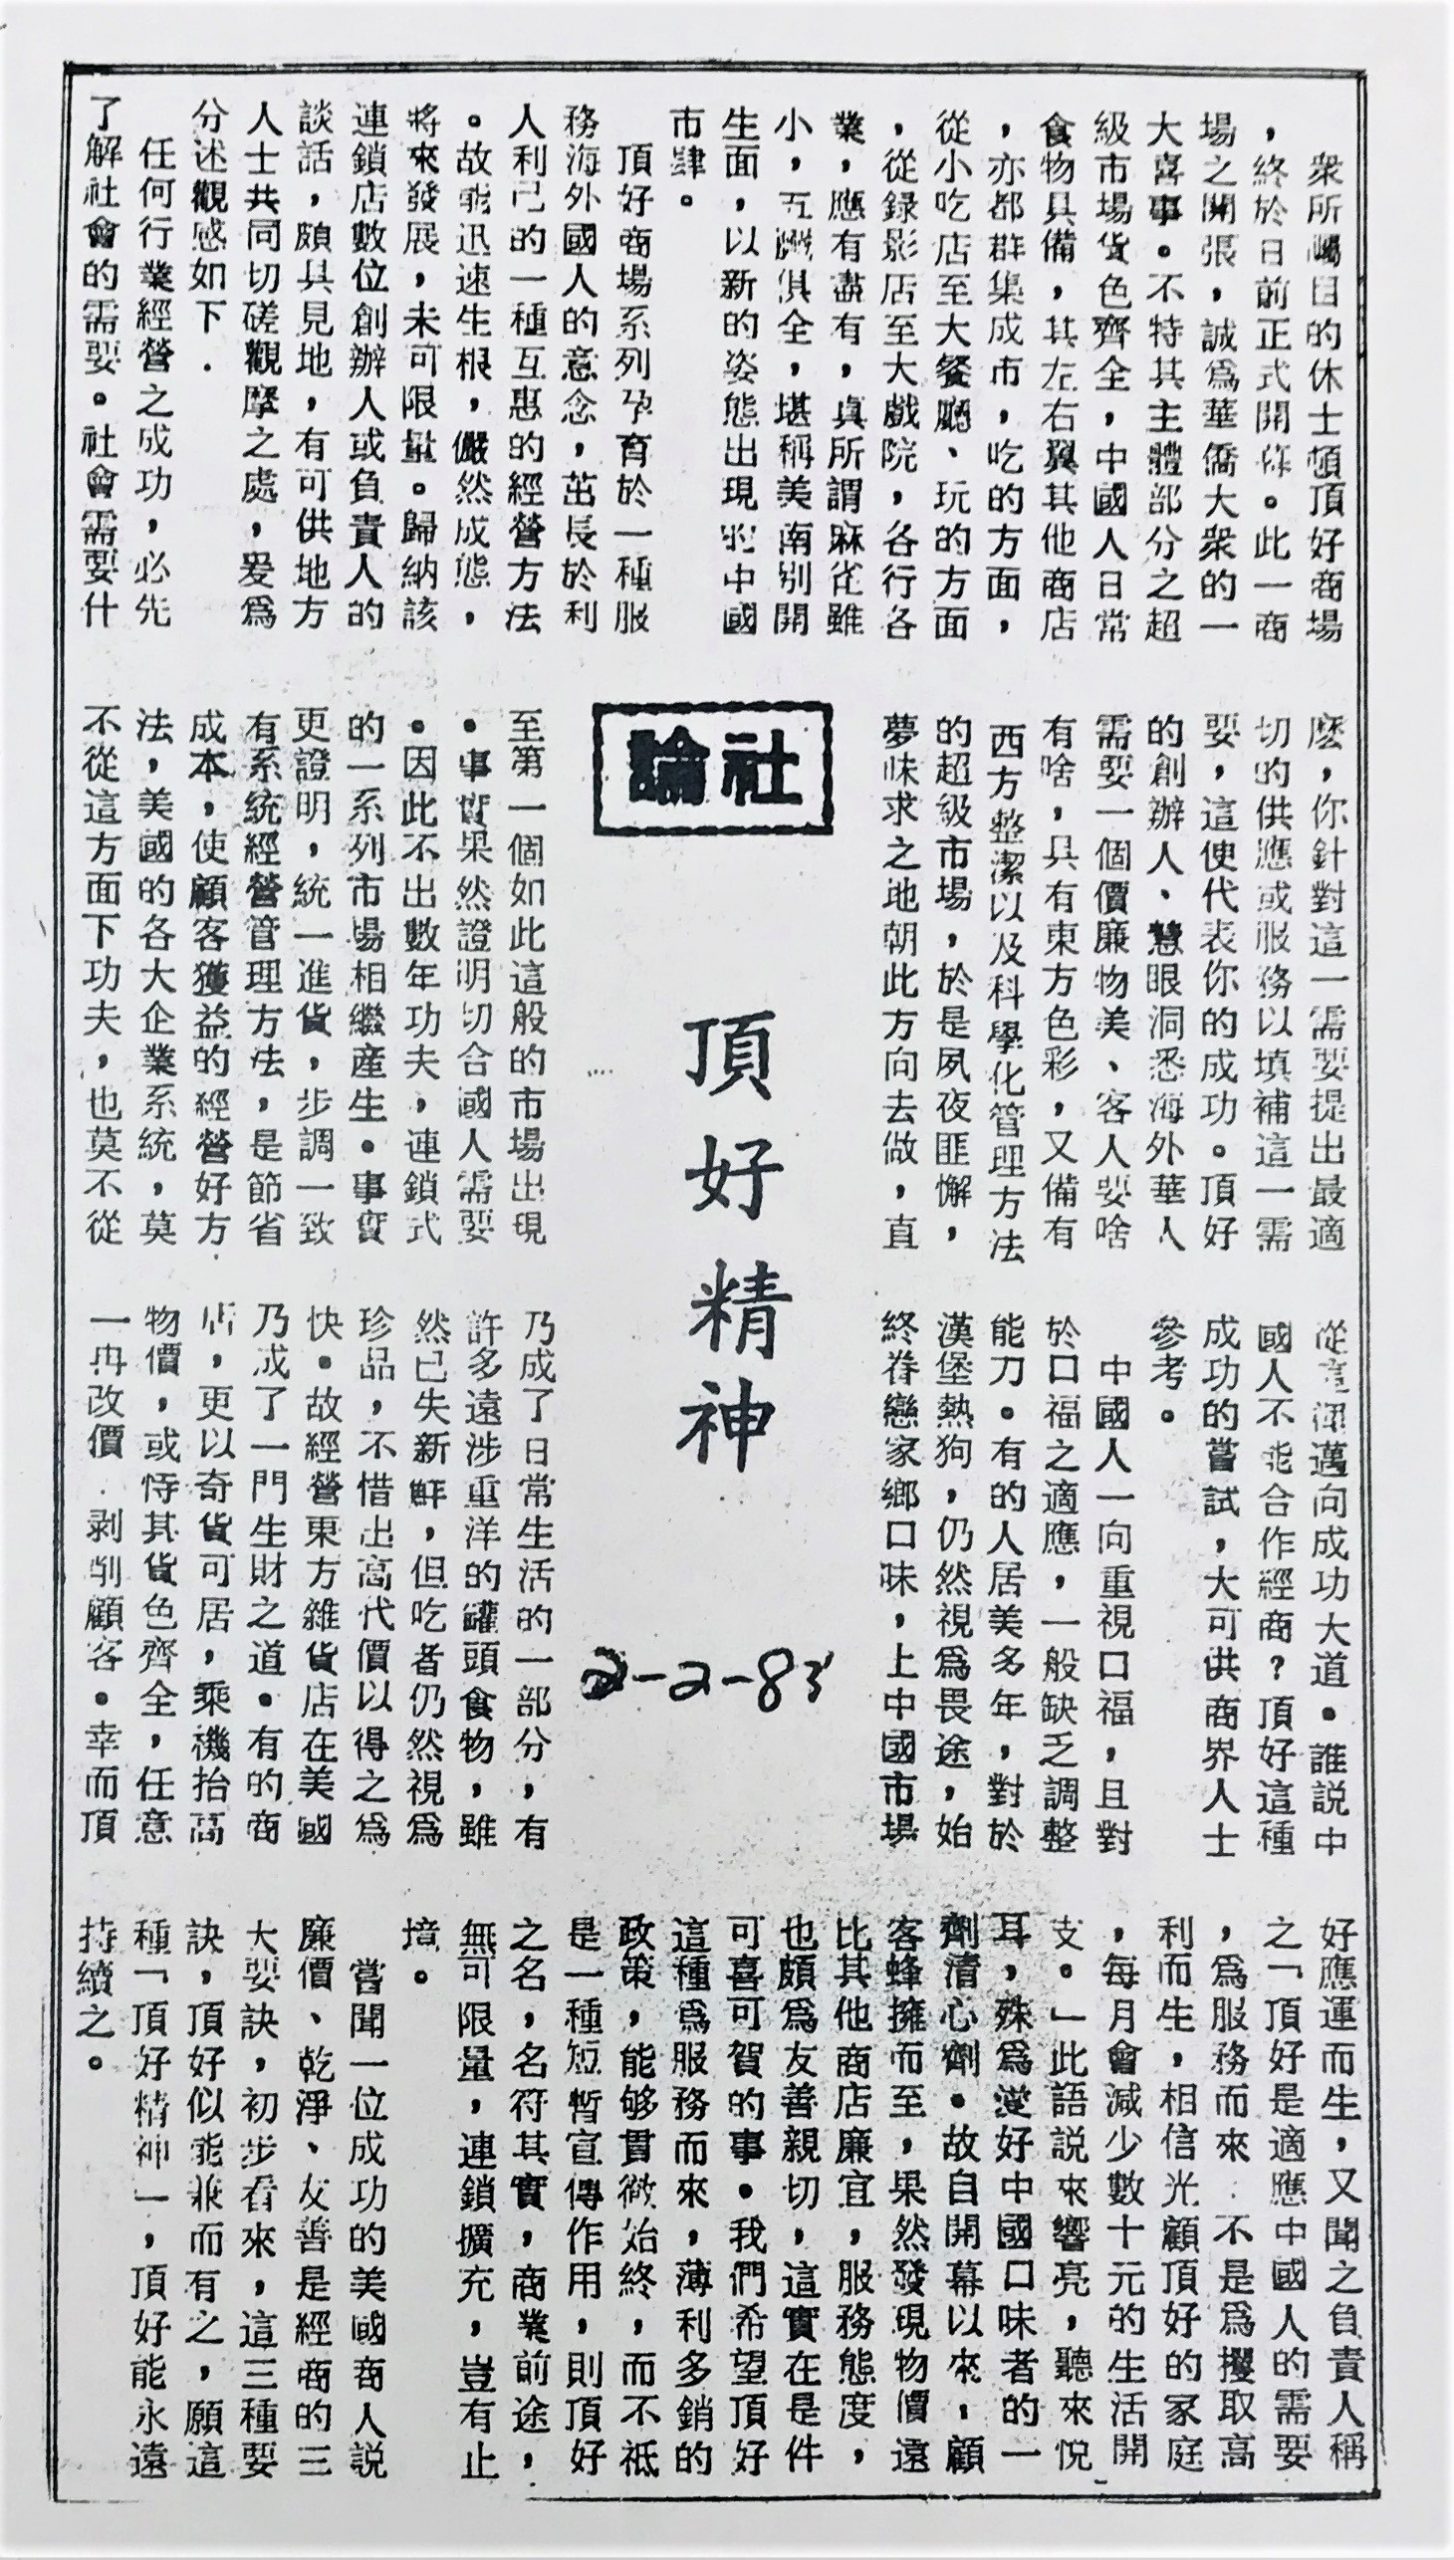 Diho Spirits - 1983 Newspaper Article